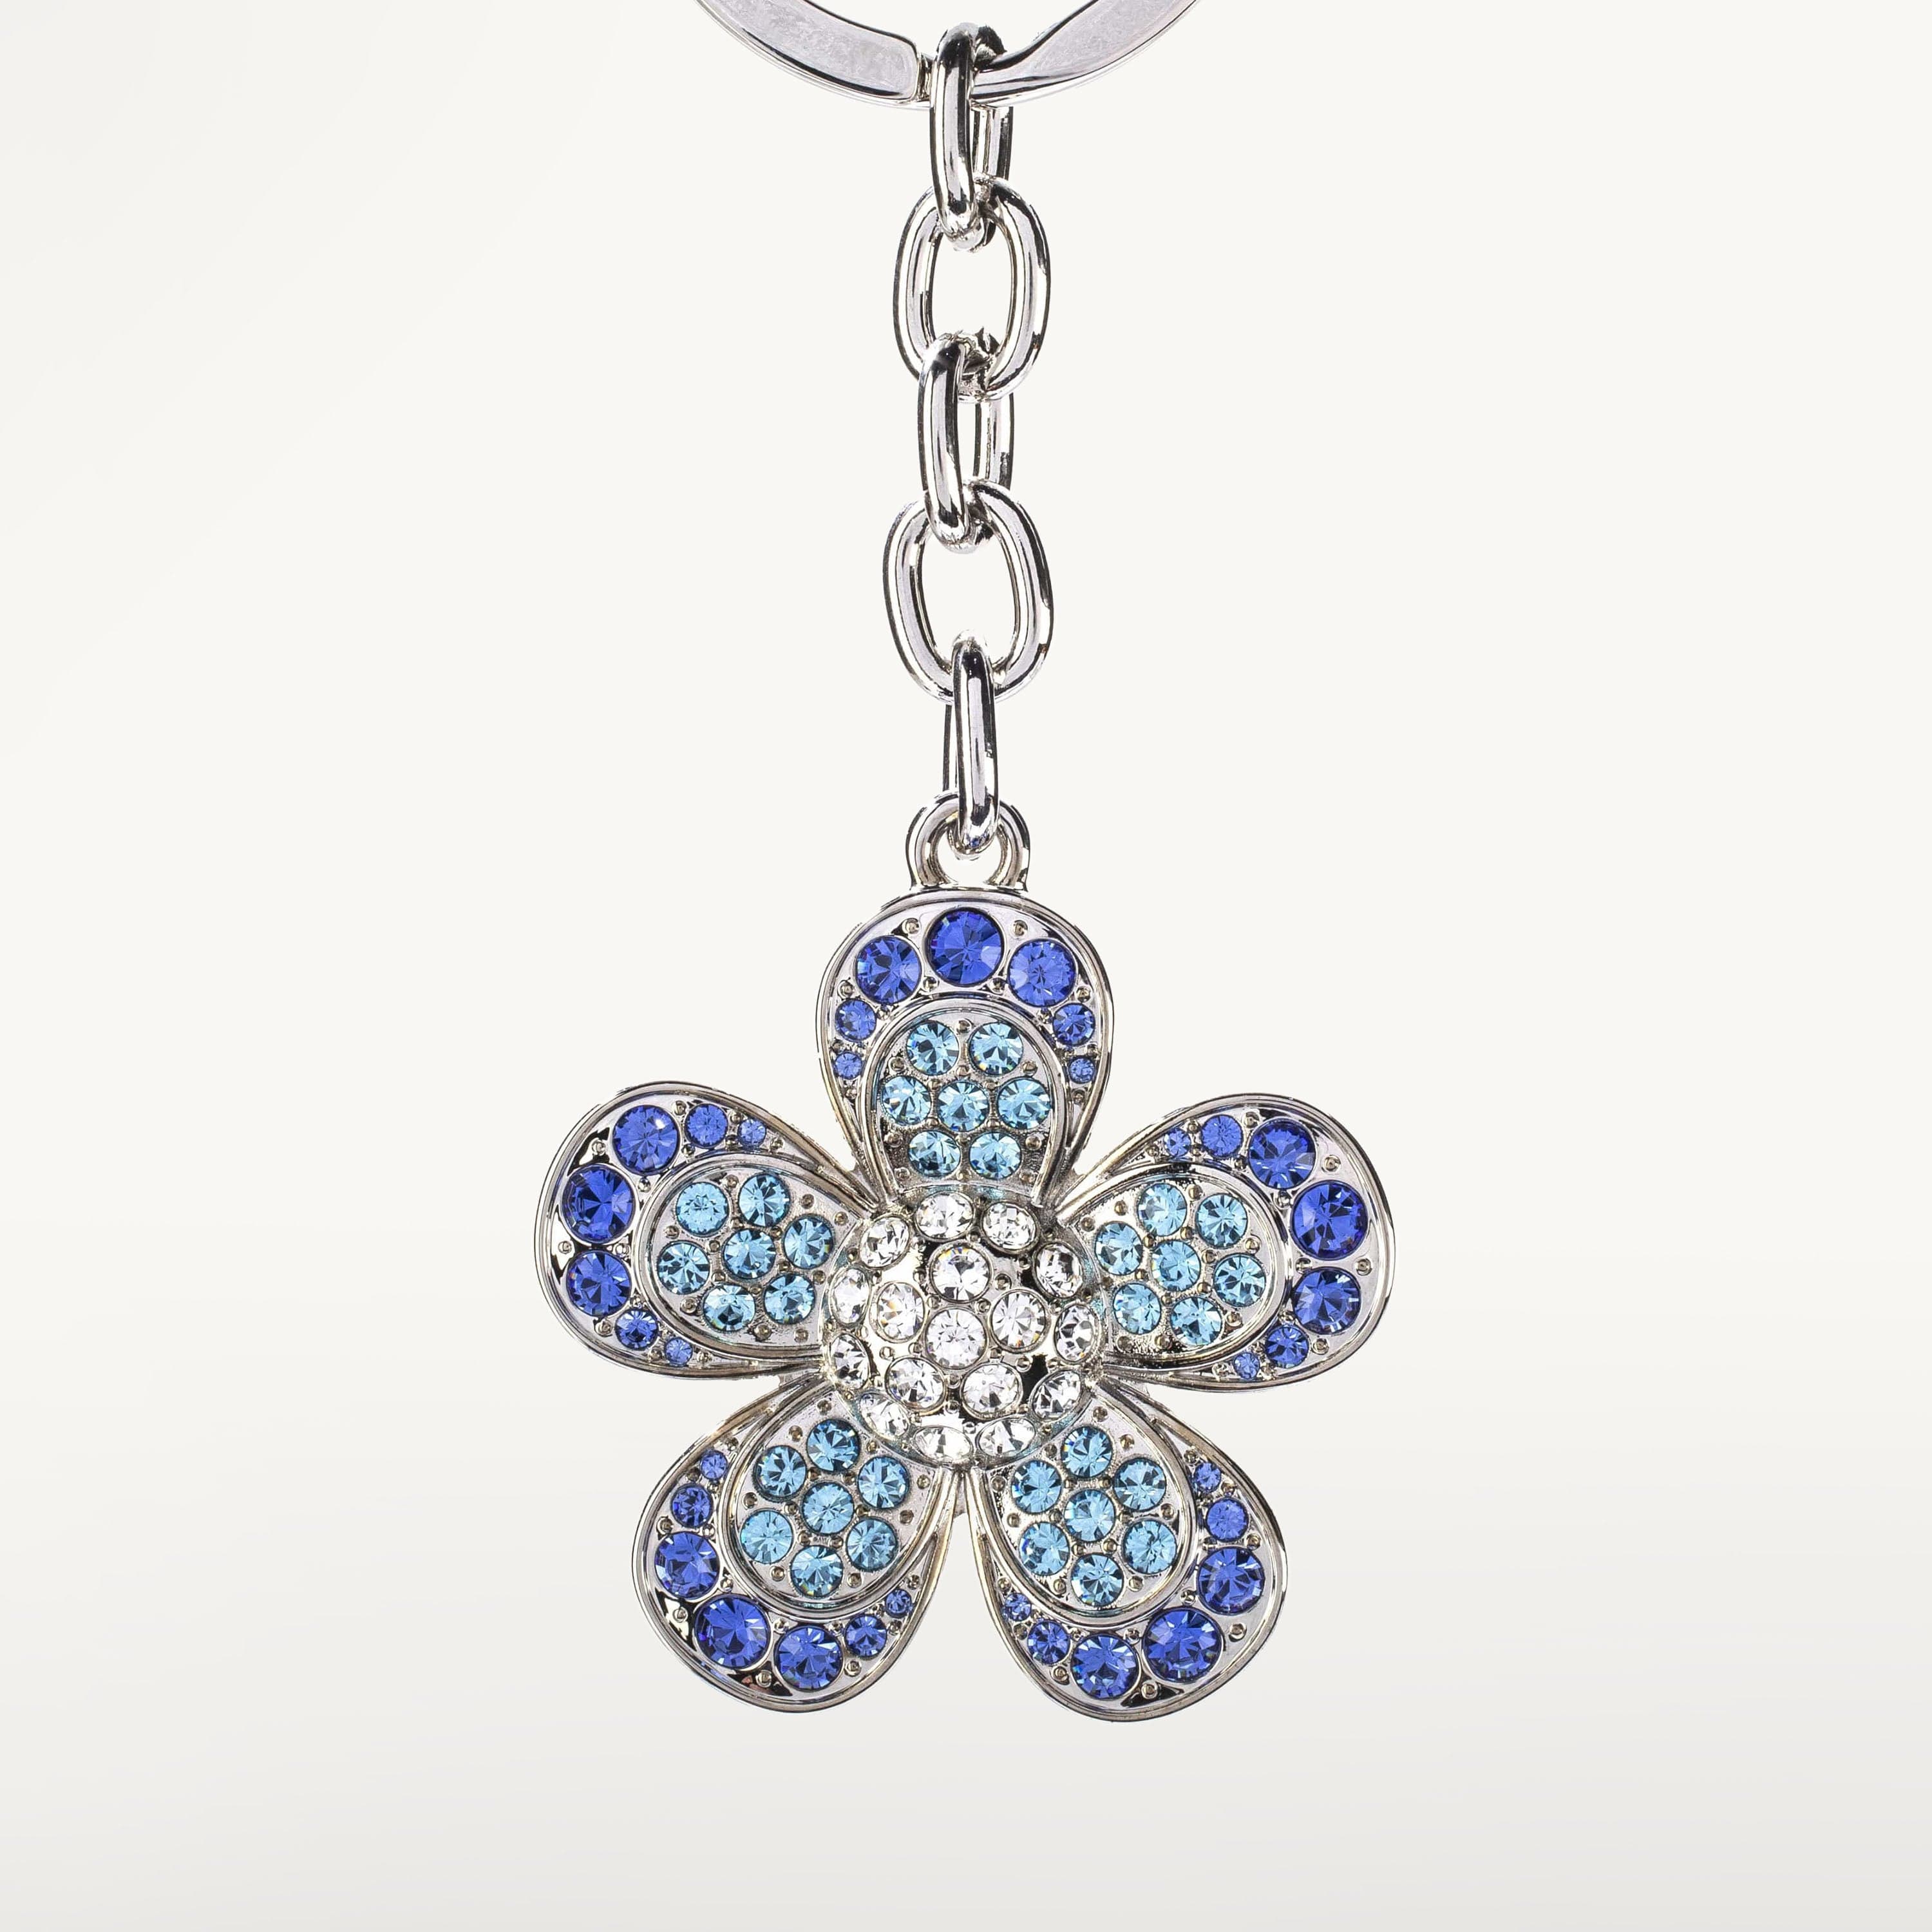 Kalifano Crystal Keychains Sapphire Flower Keychain made with Swarovski Crystals SKC-052